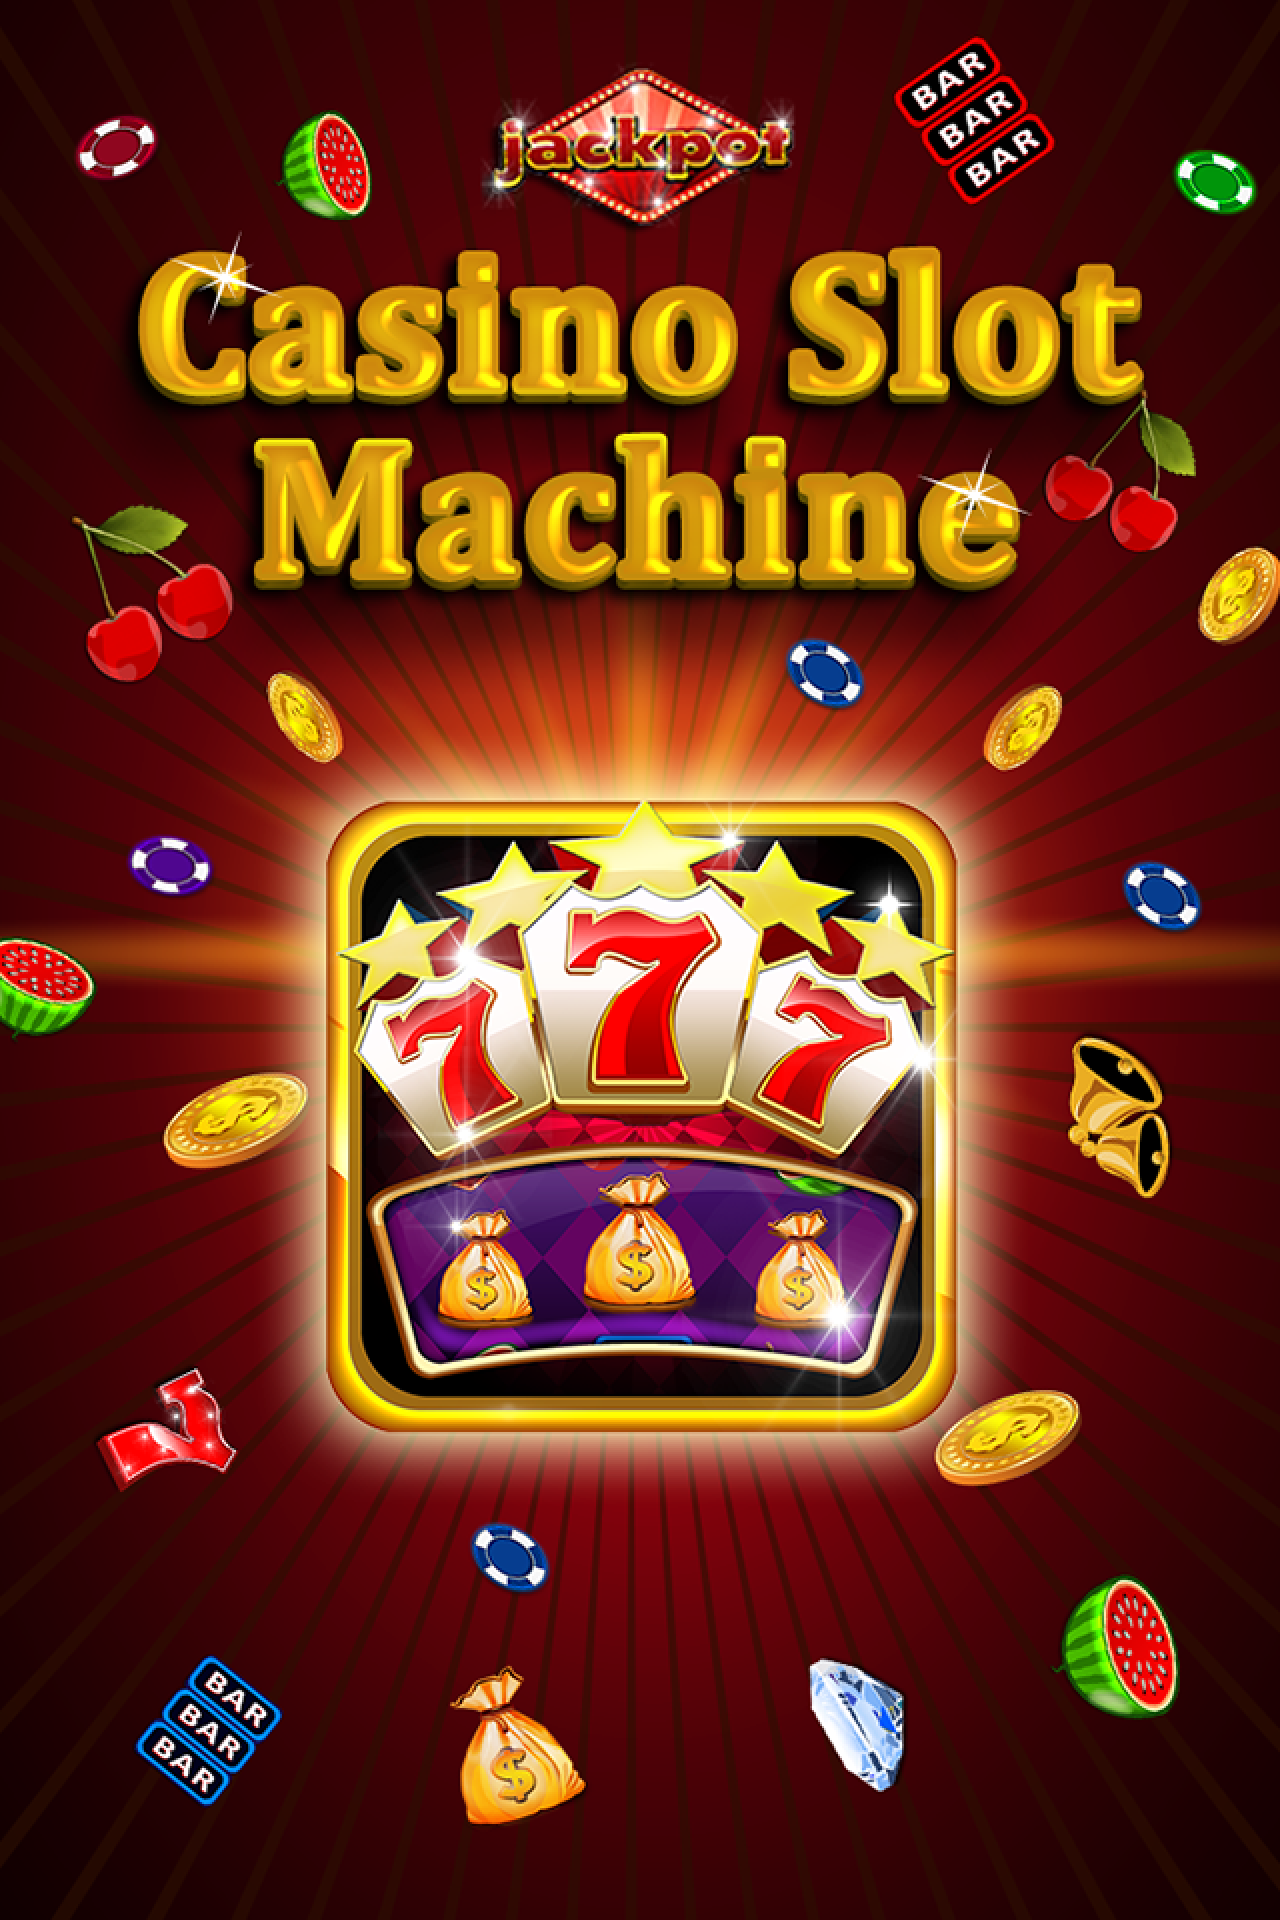 Casino bonus slot machines